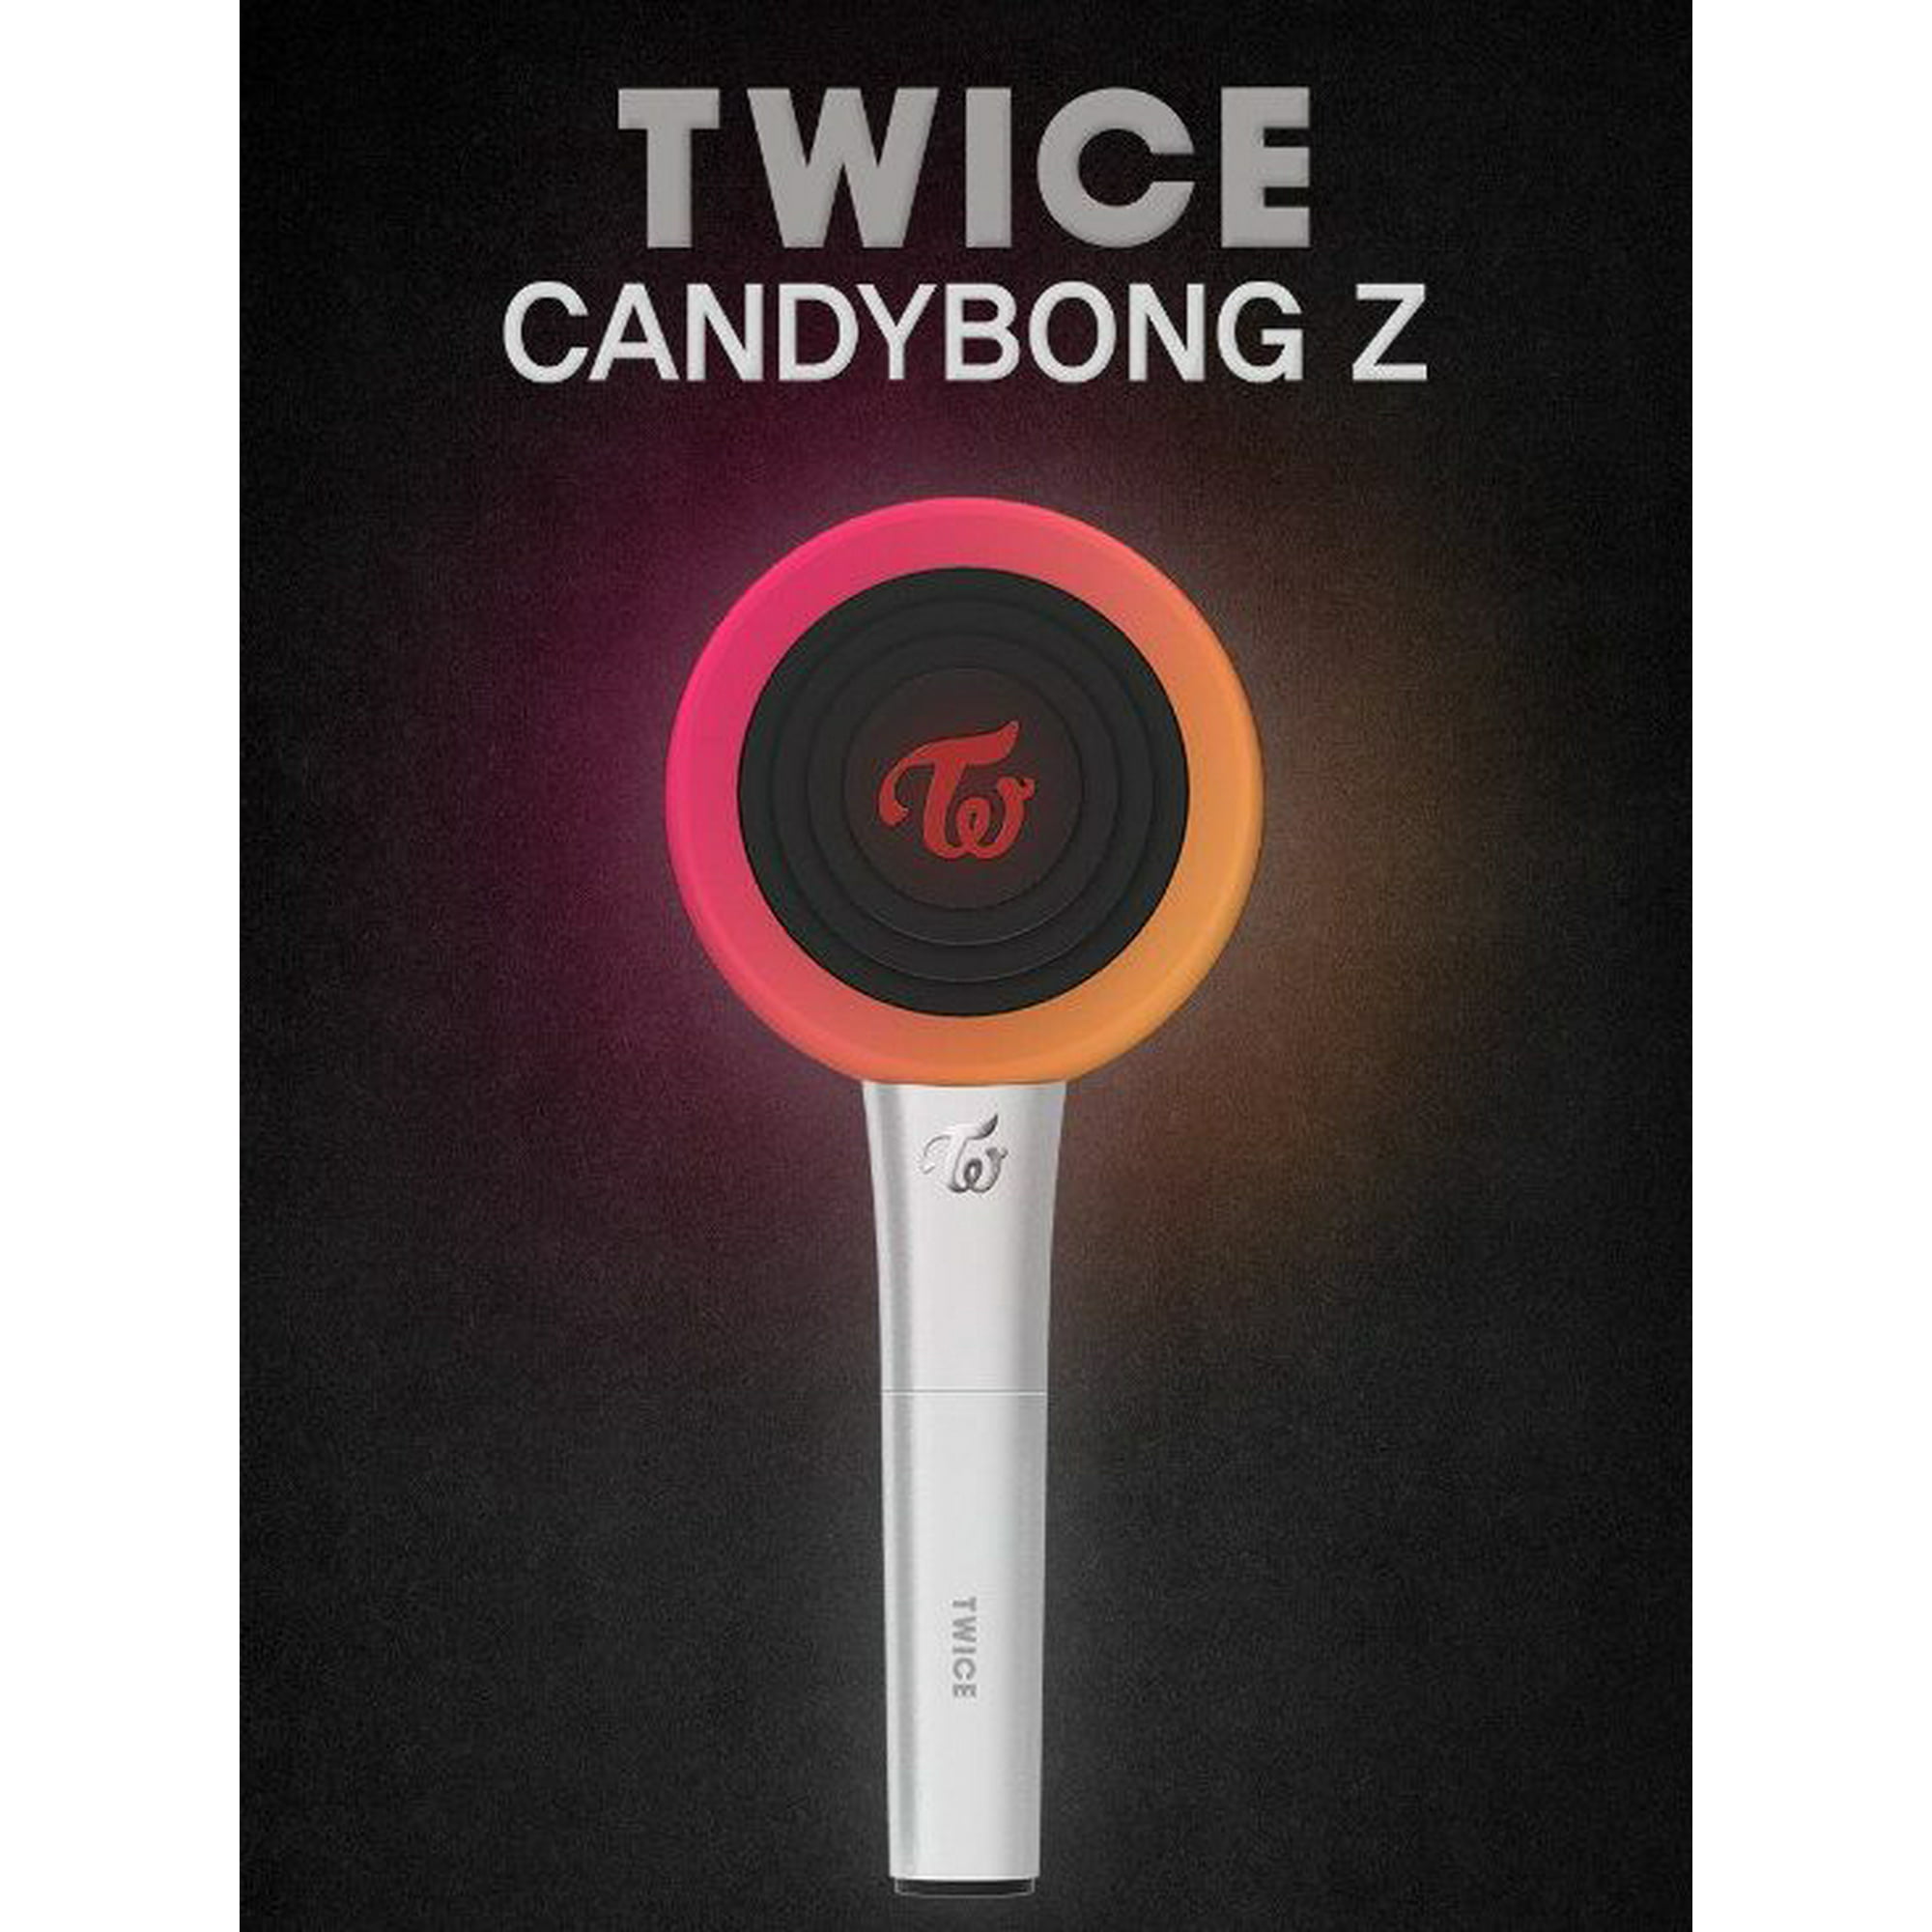 Kpop - Twice - Lightstick Oficial - Candybong Z JYP Entertainment Candybong  Z Ver. 2 Lightstick